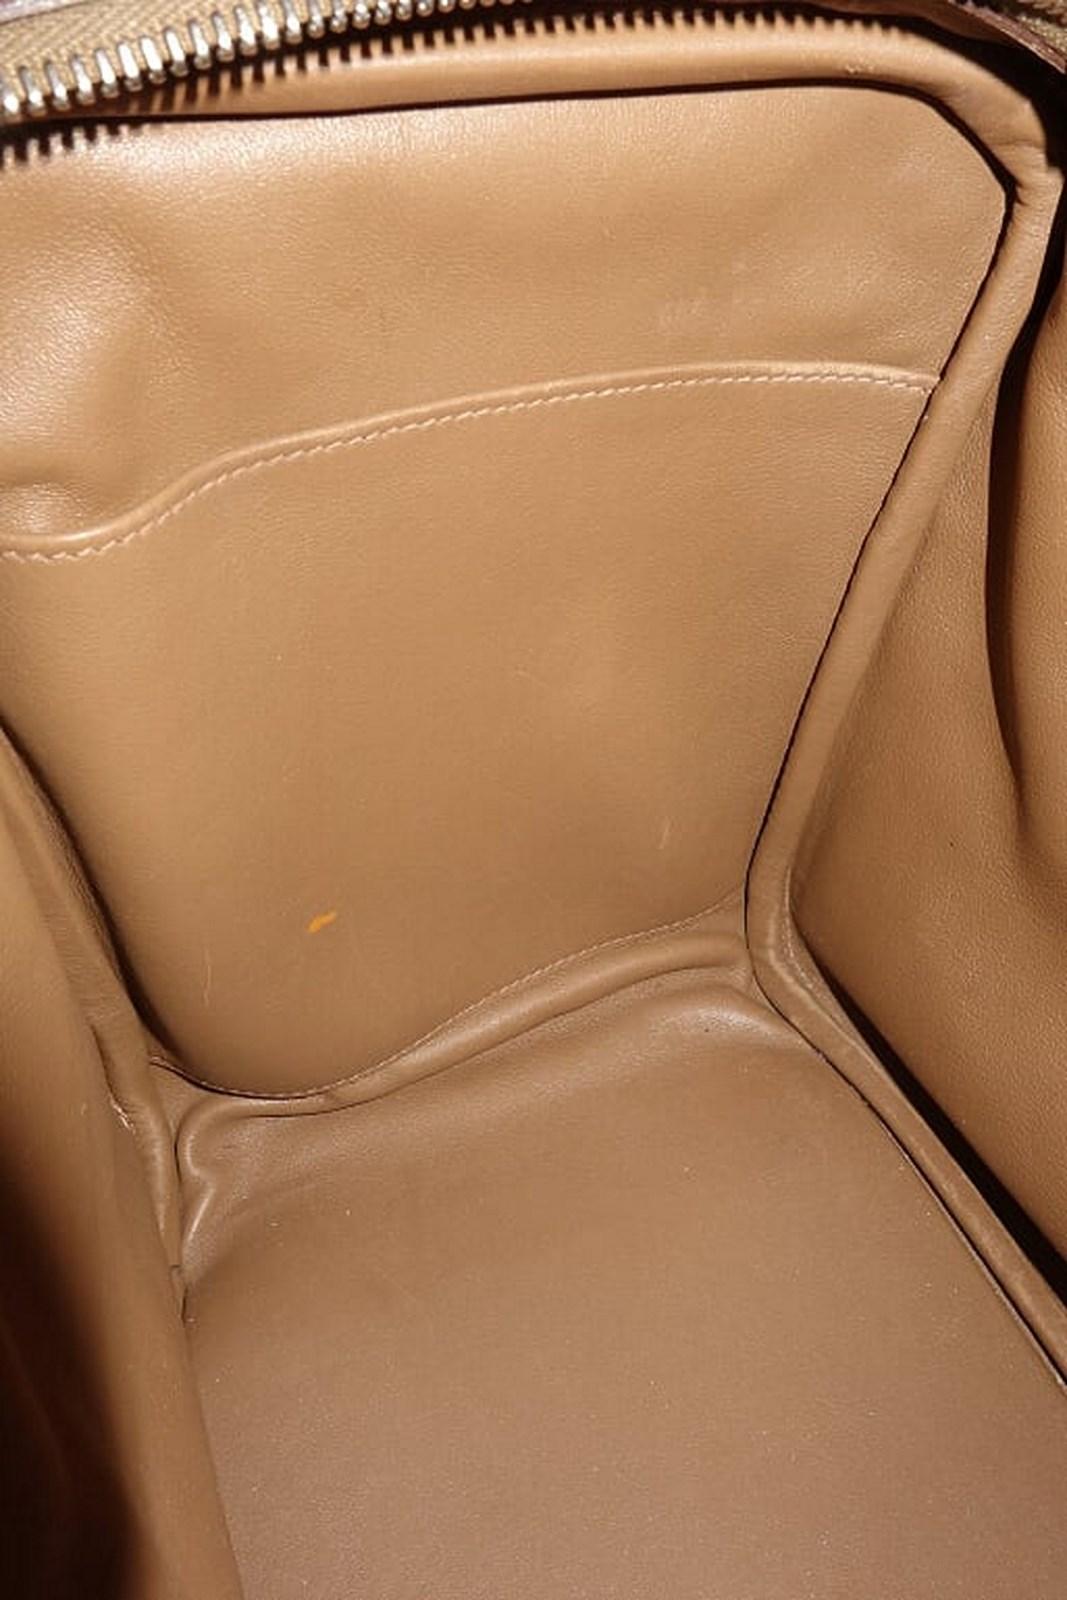 Hermès Lindy Hand Bag 2 ways Light Brown Swift Leather PHW 34 cm 12